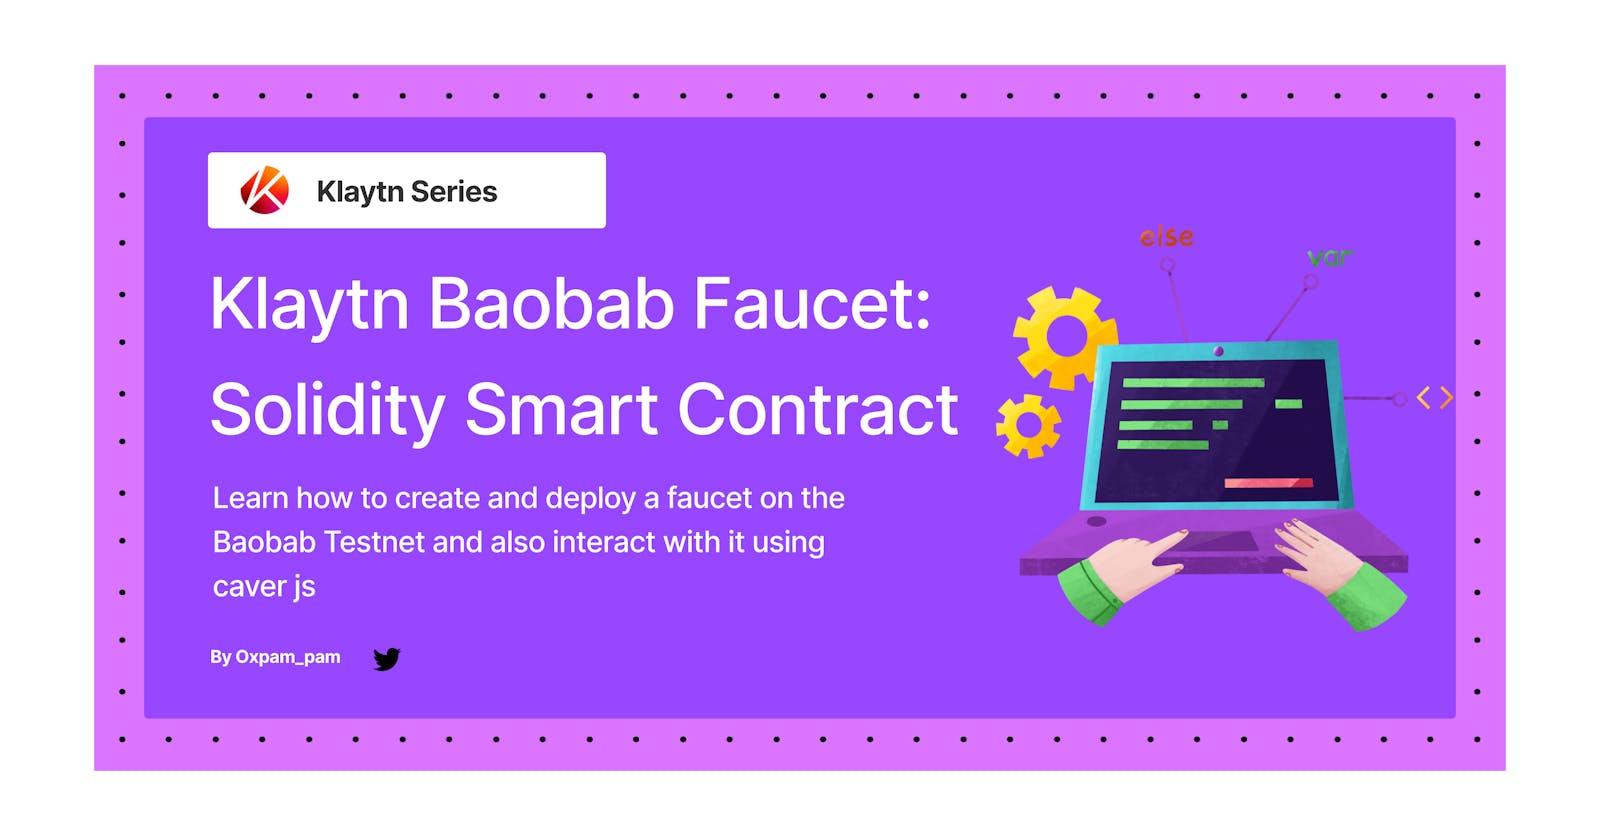 Klaytn Baobab Faucet: Solidity Smart Contract